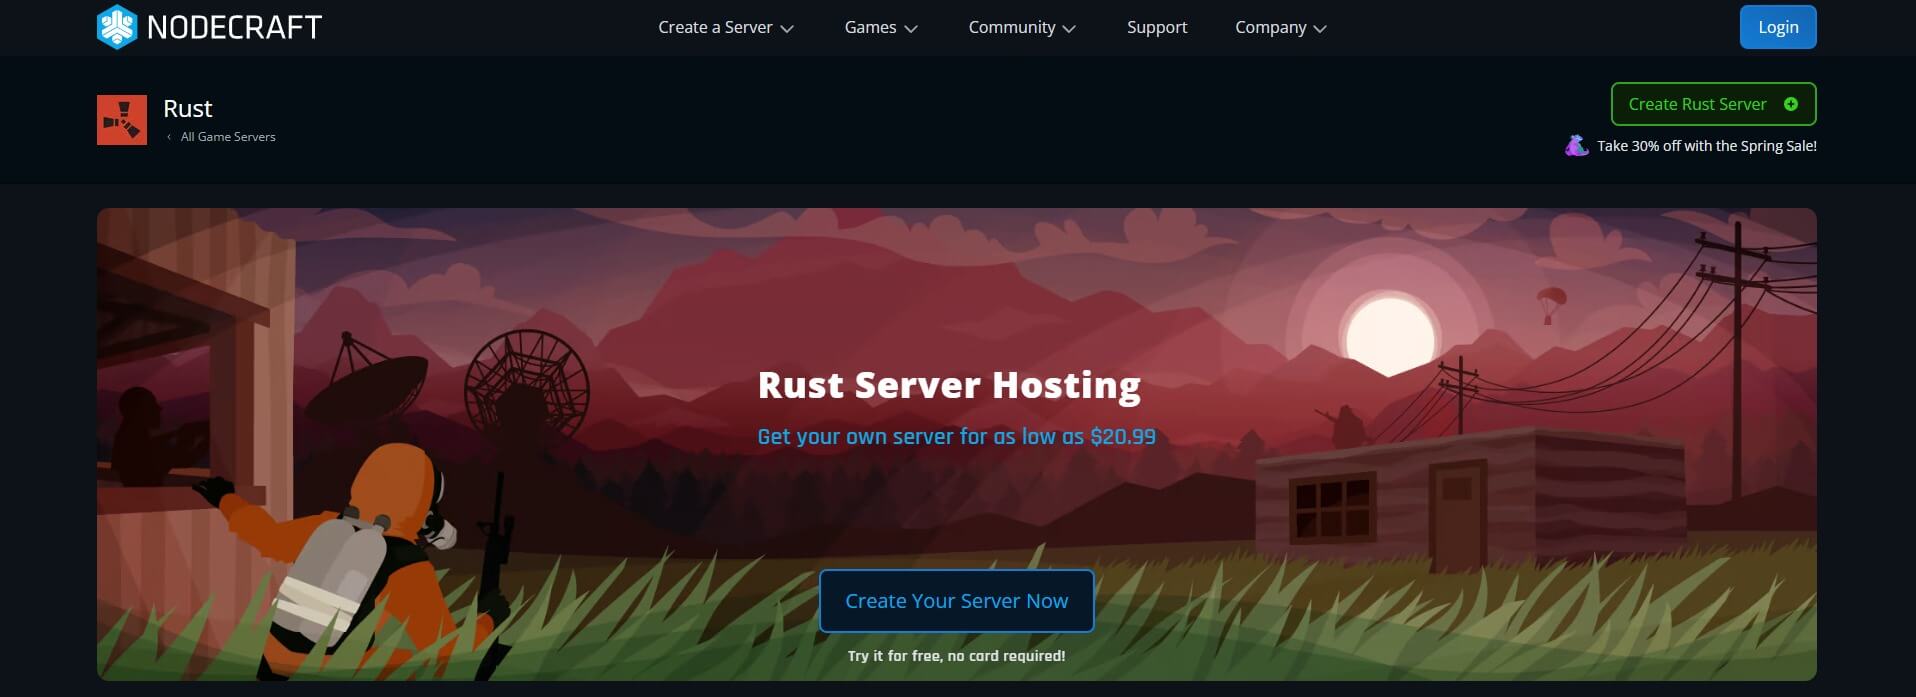 Rust Server Hosting Nodecraft